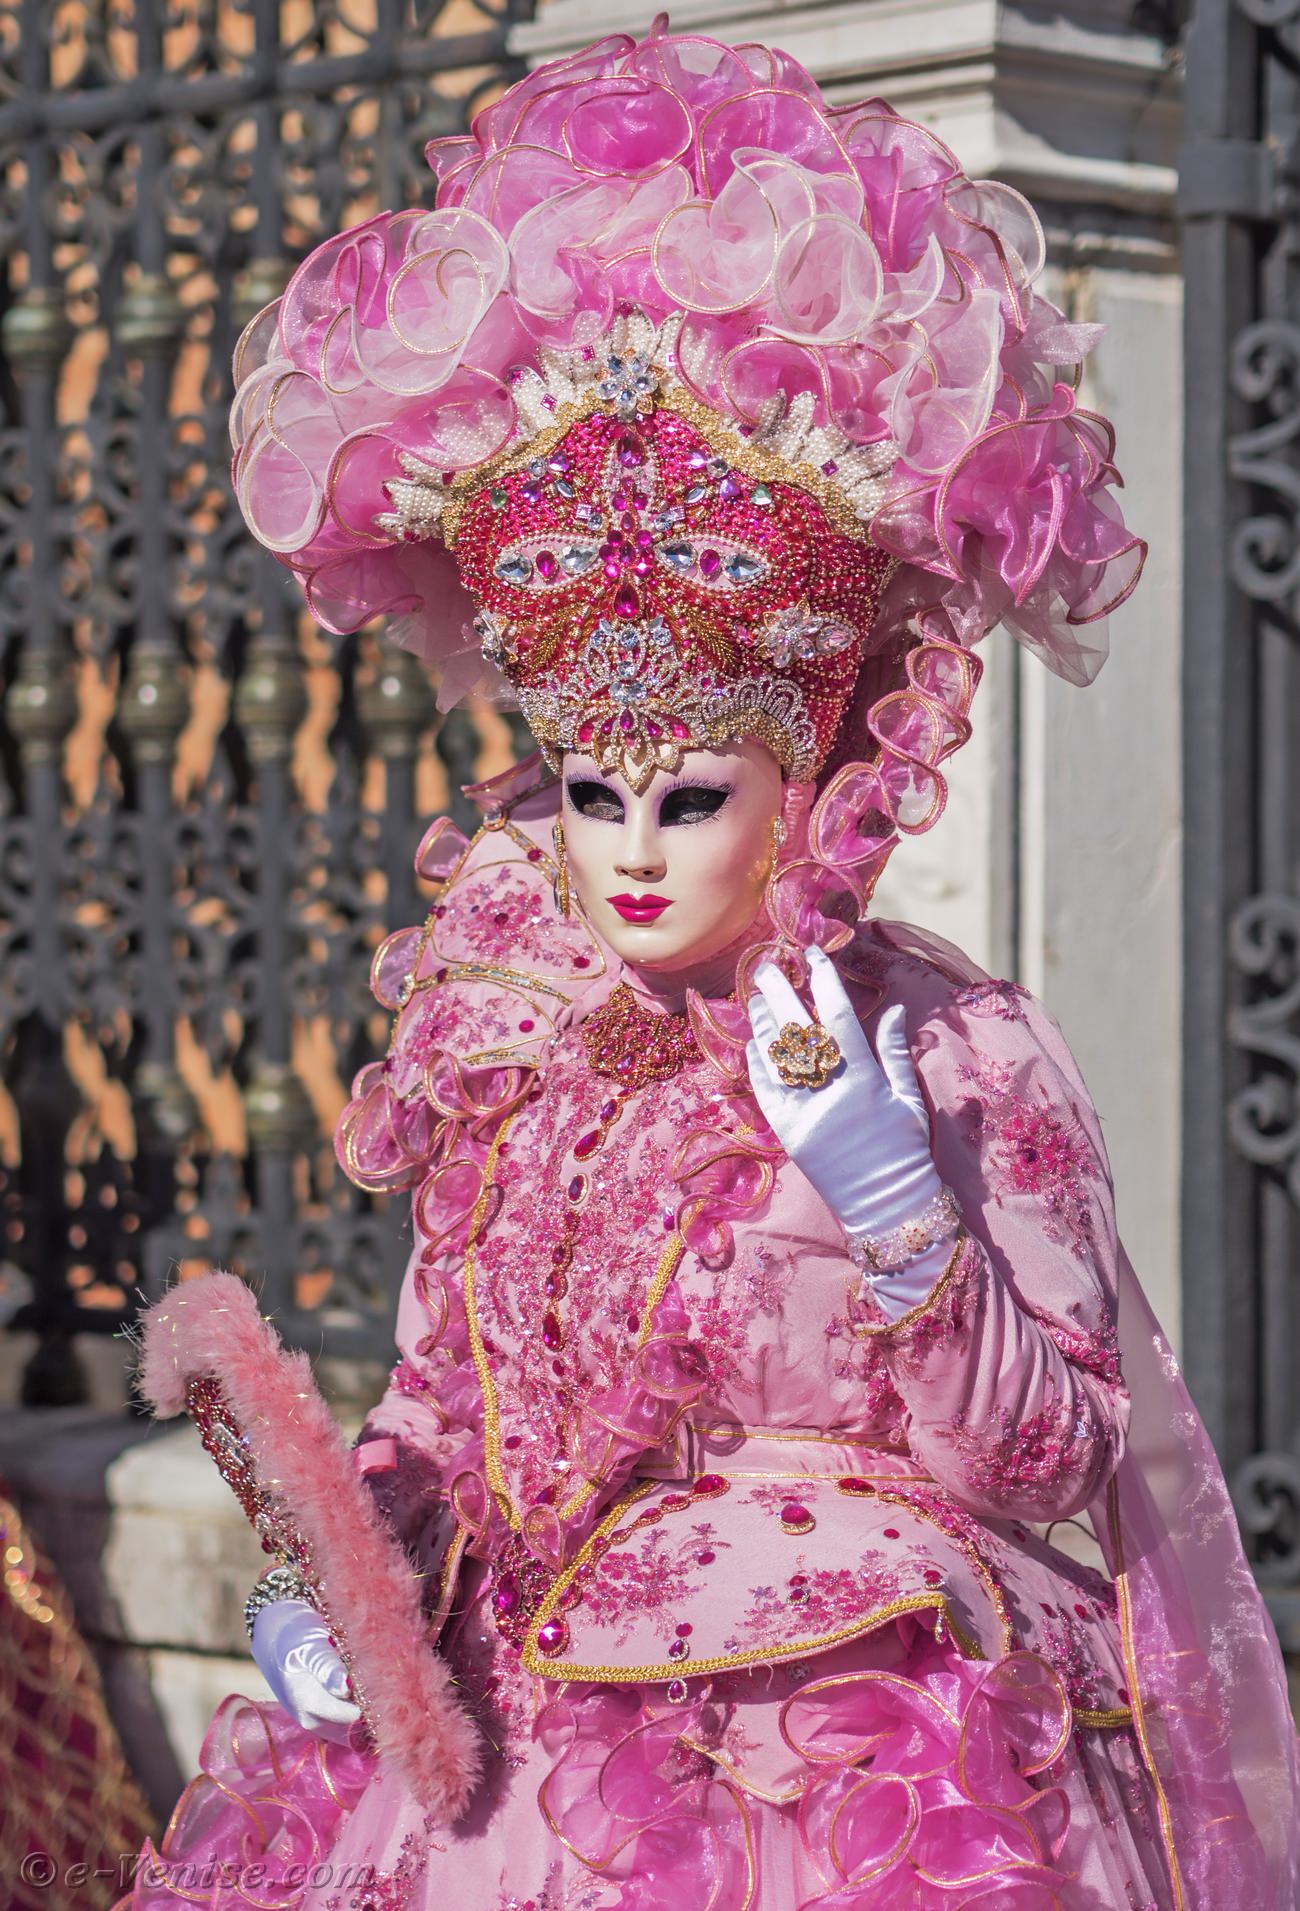 Masques Costumes Carnaval Venise 2019